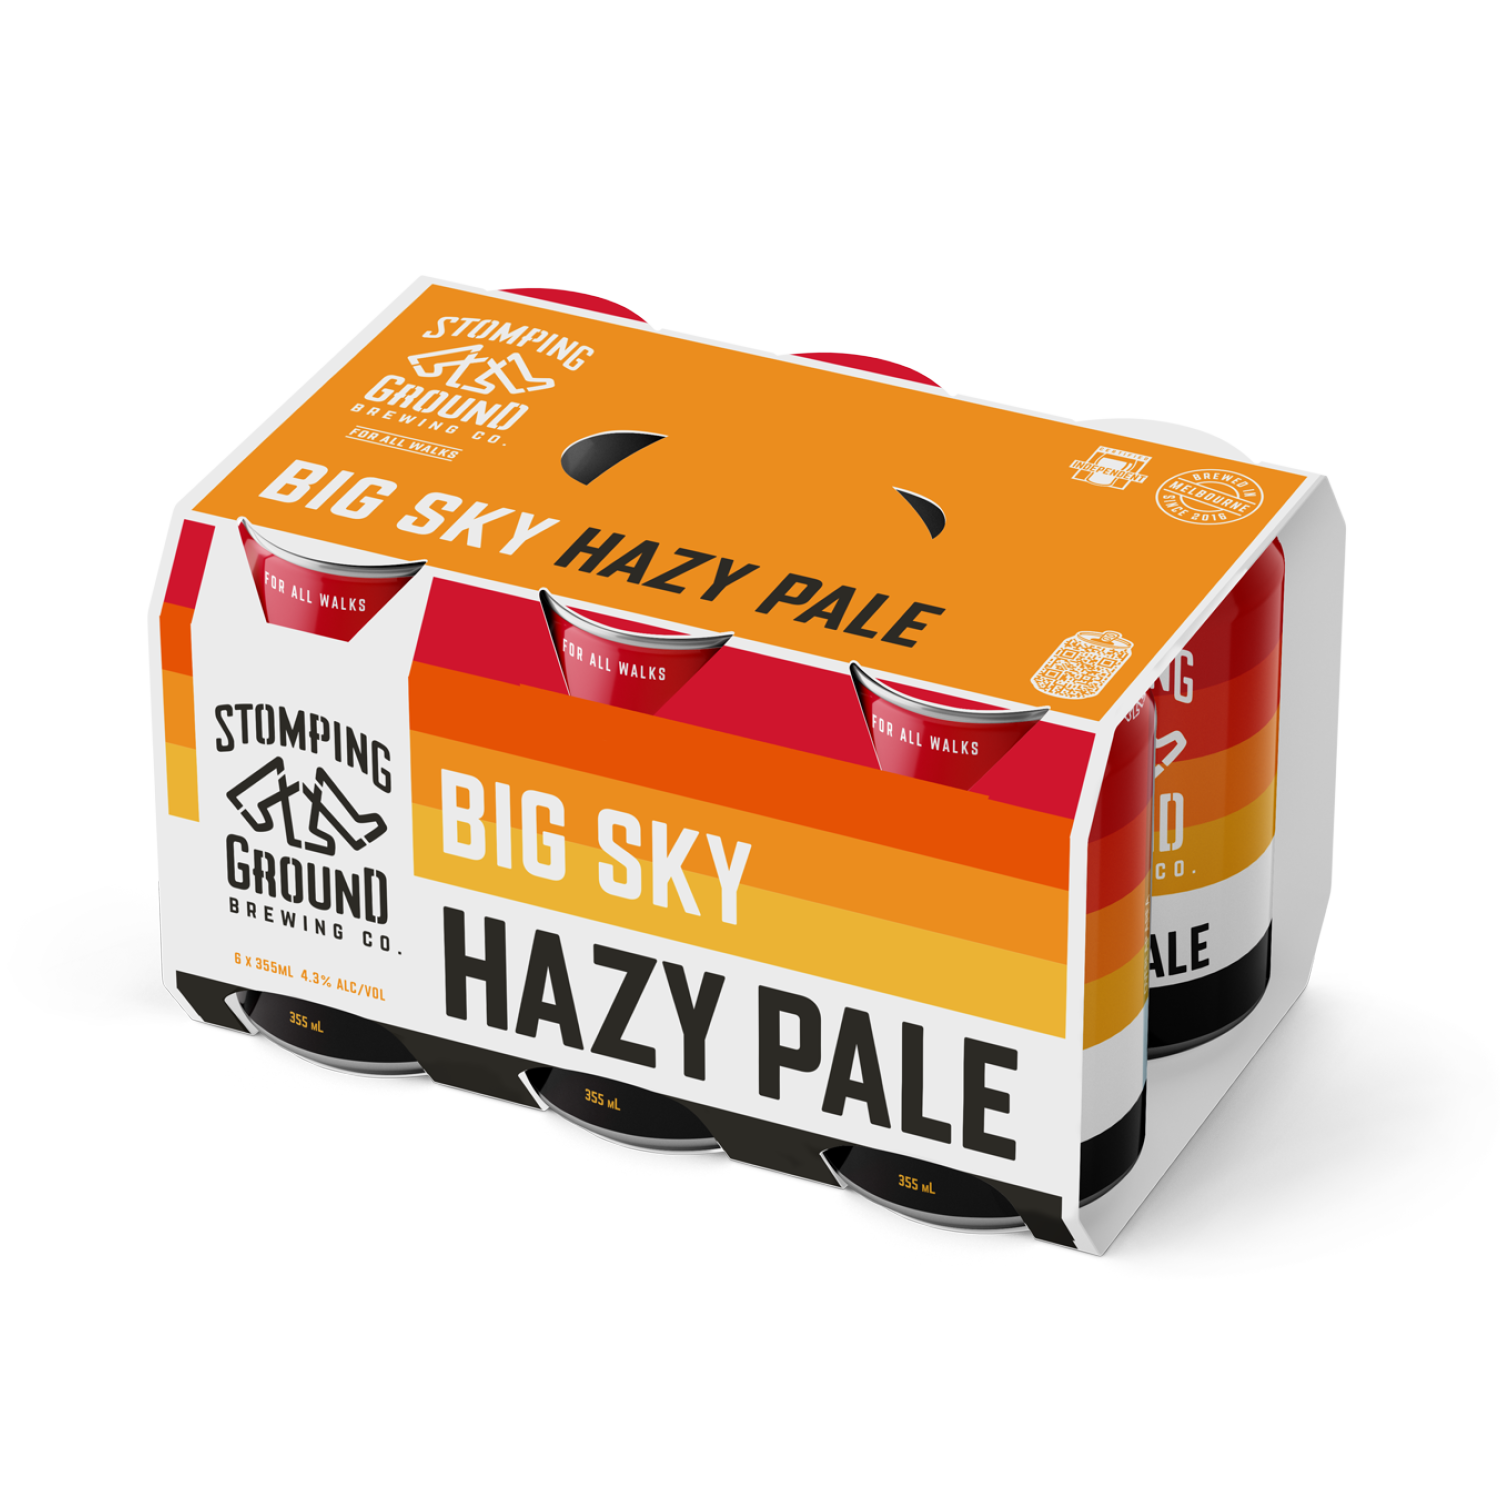 Big Sky Hazy Pale